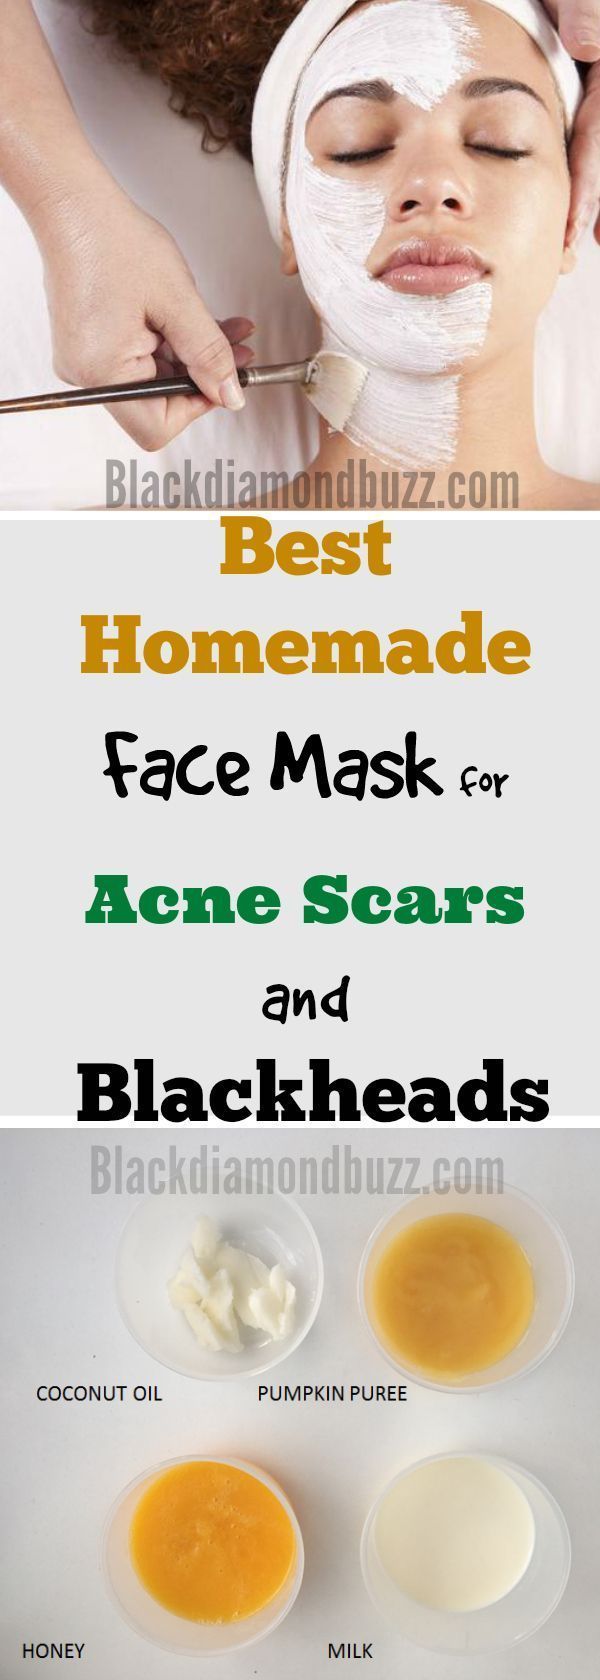 Duchess reccomend Homemade facial mask for blackheads